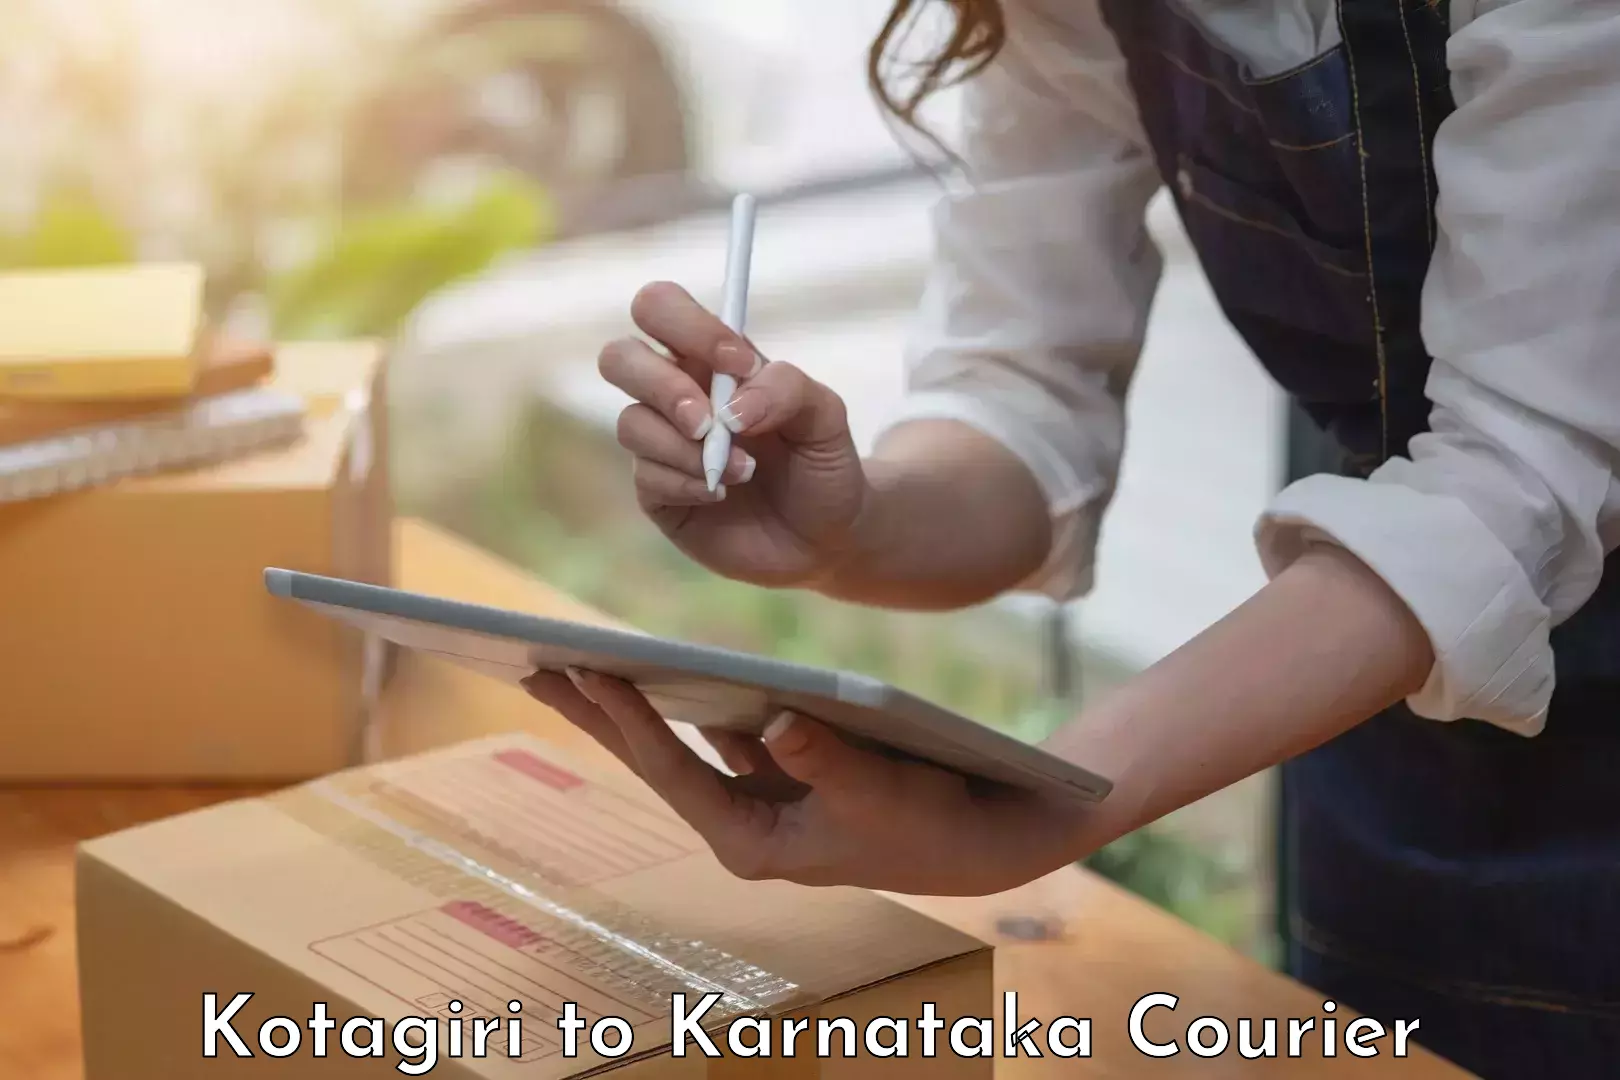 Furniture delivery service Kotagiri to Karnataka